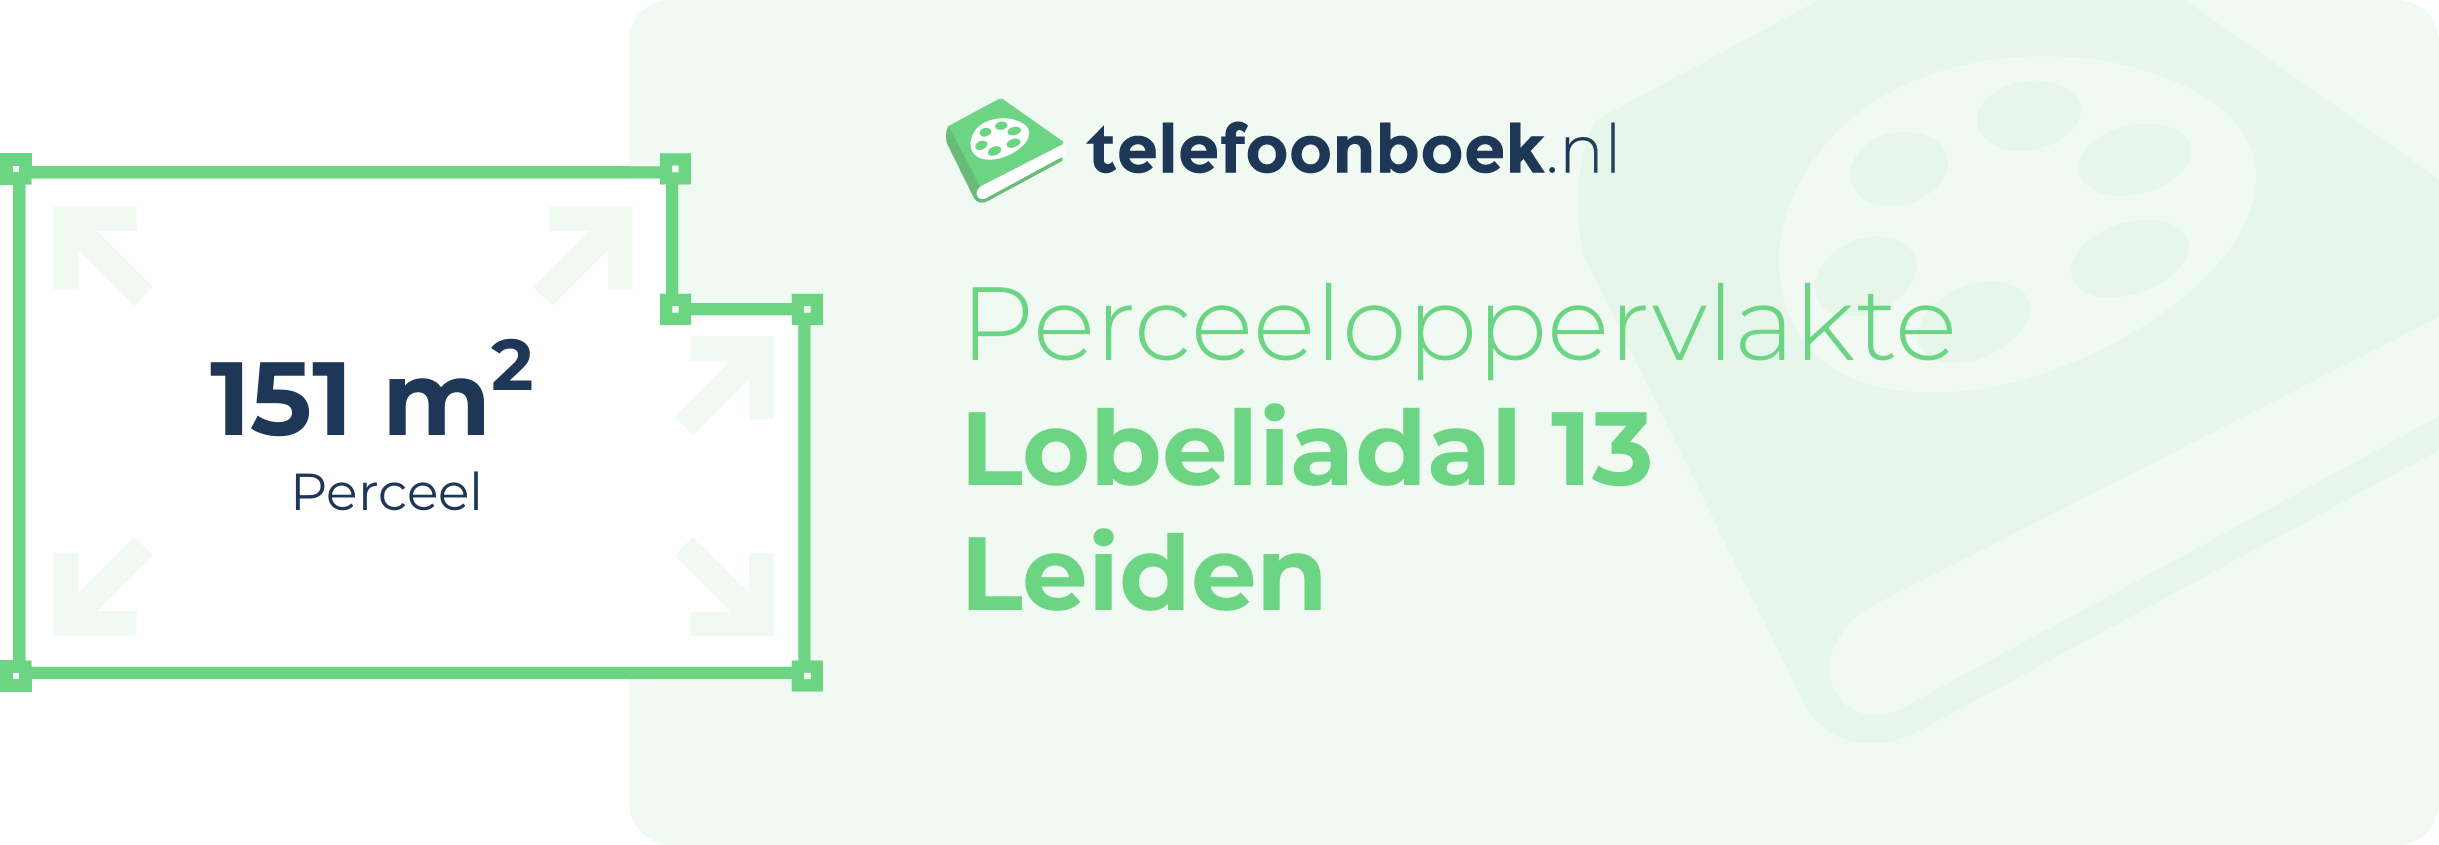 Perceeloppervlakte Lobeliadal 13 Leiden